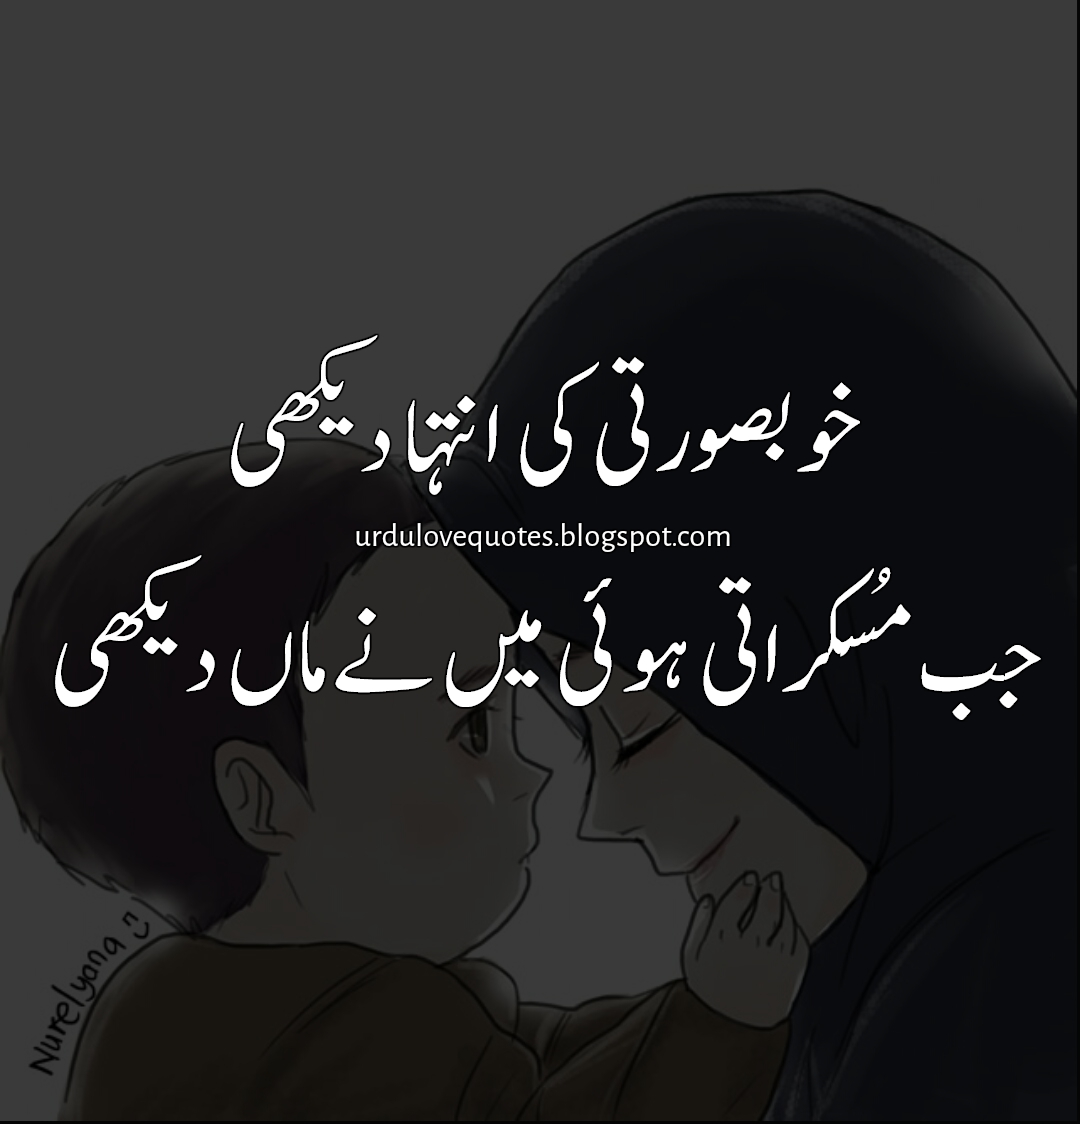 Khubsurati ki inteha | Urdu love quotes ~ Urdu Love Quotes and Thoughts